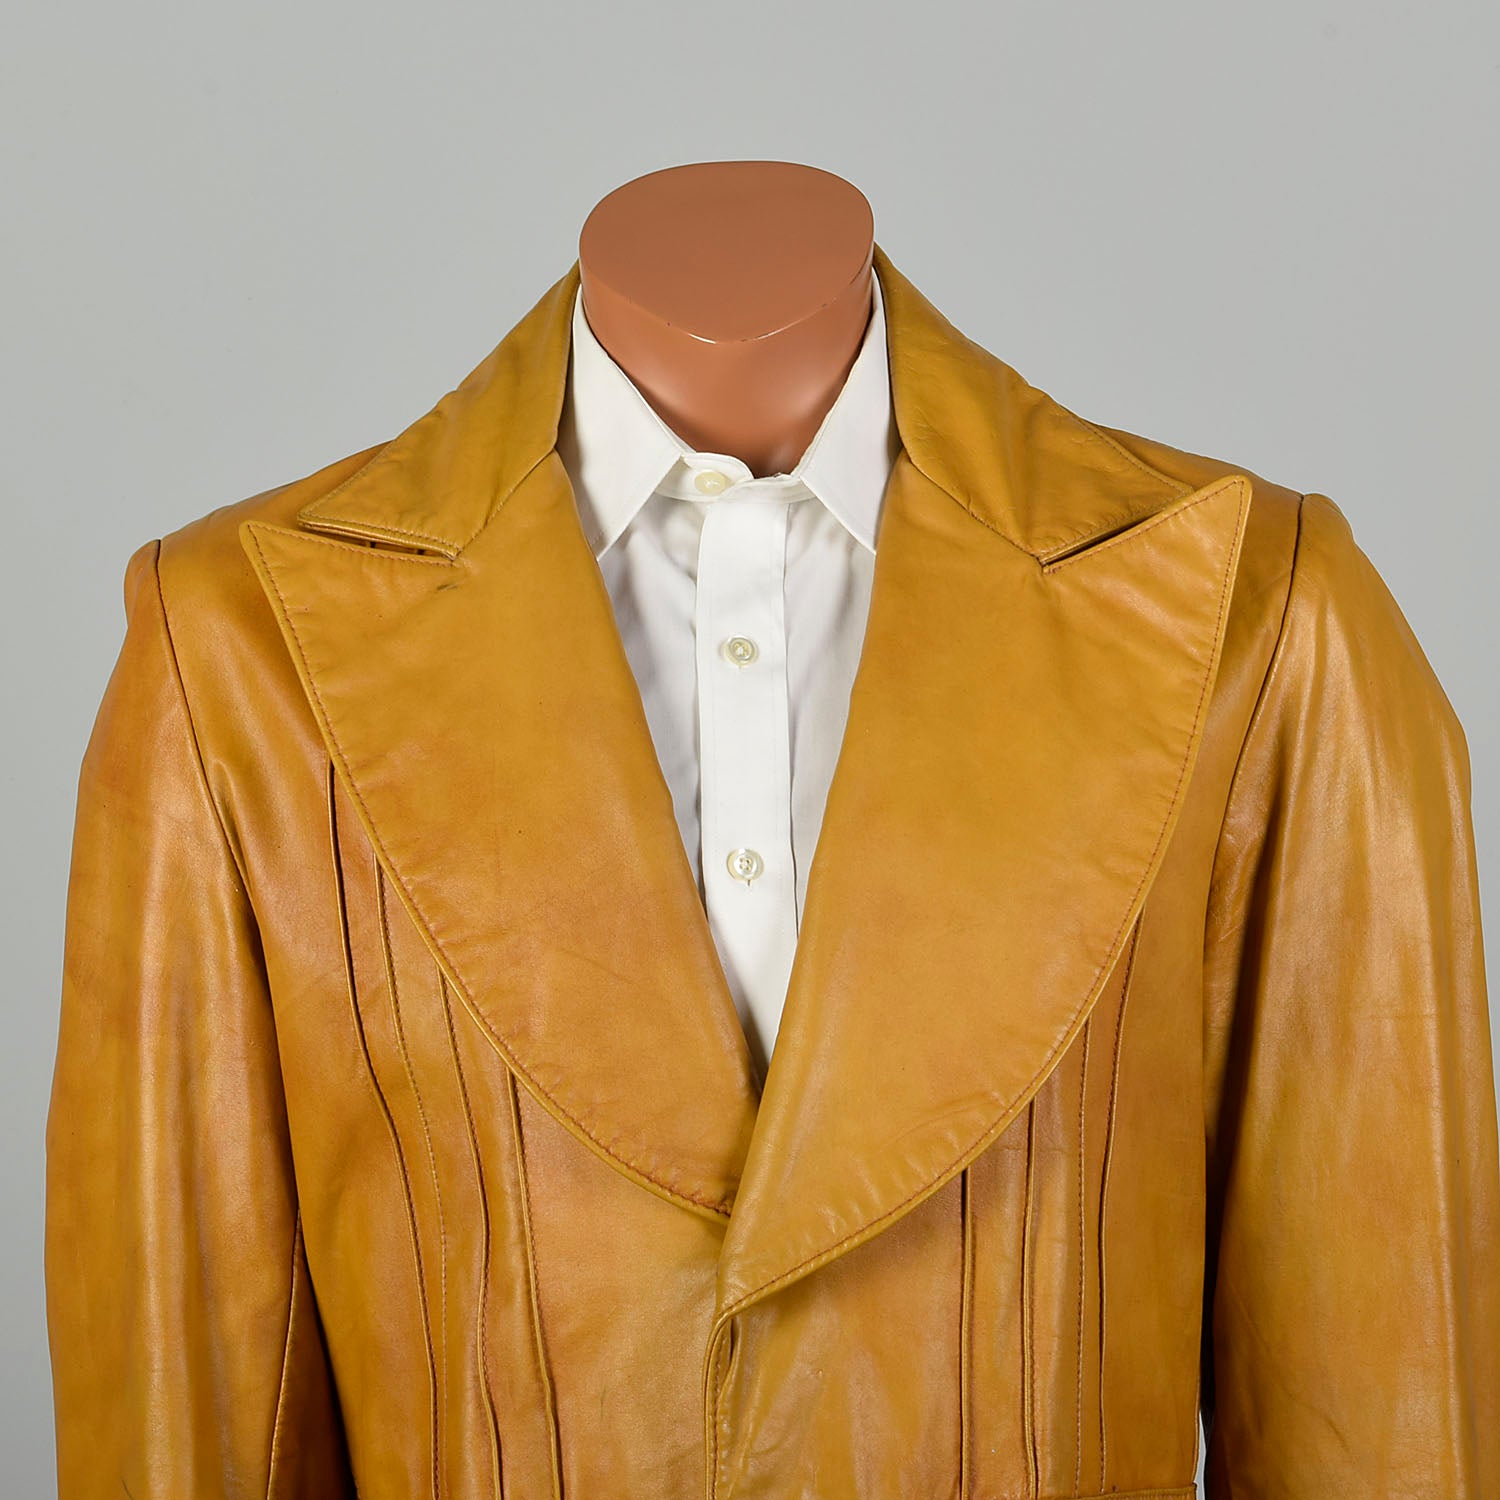 Medium 1970s Trench Coat Mustard Leather Overcoat